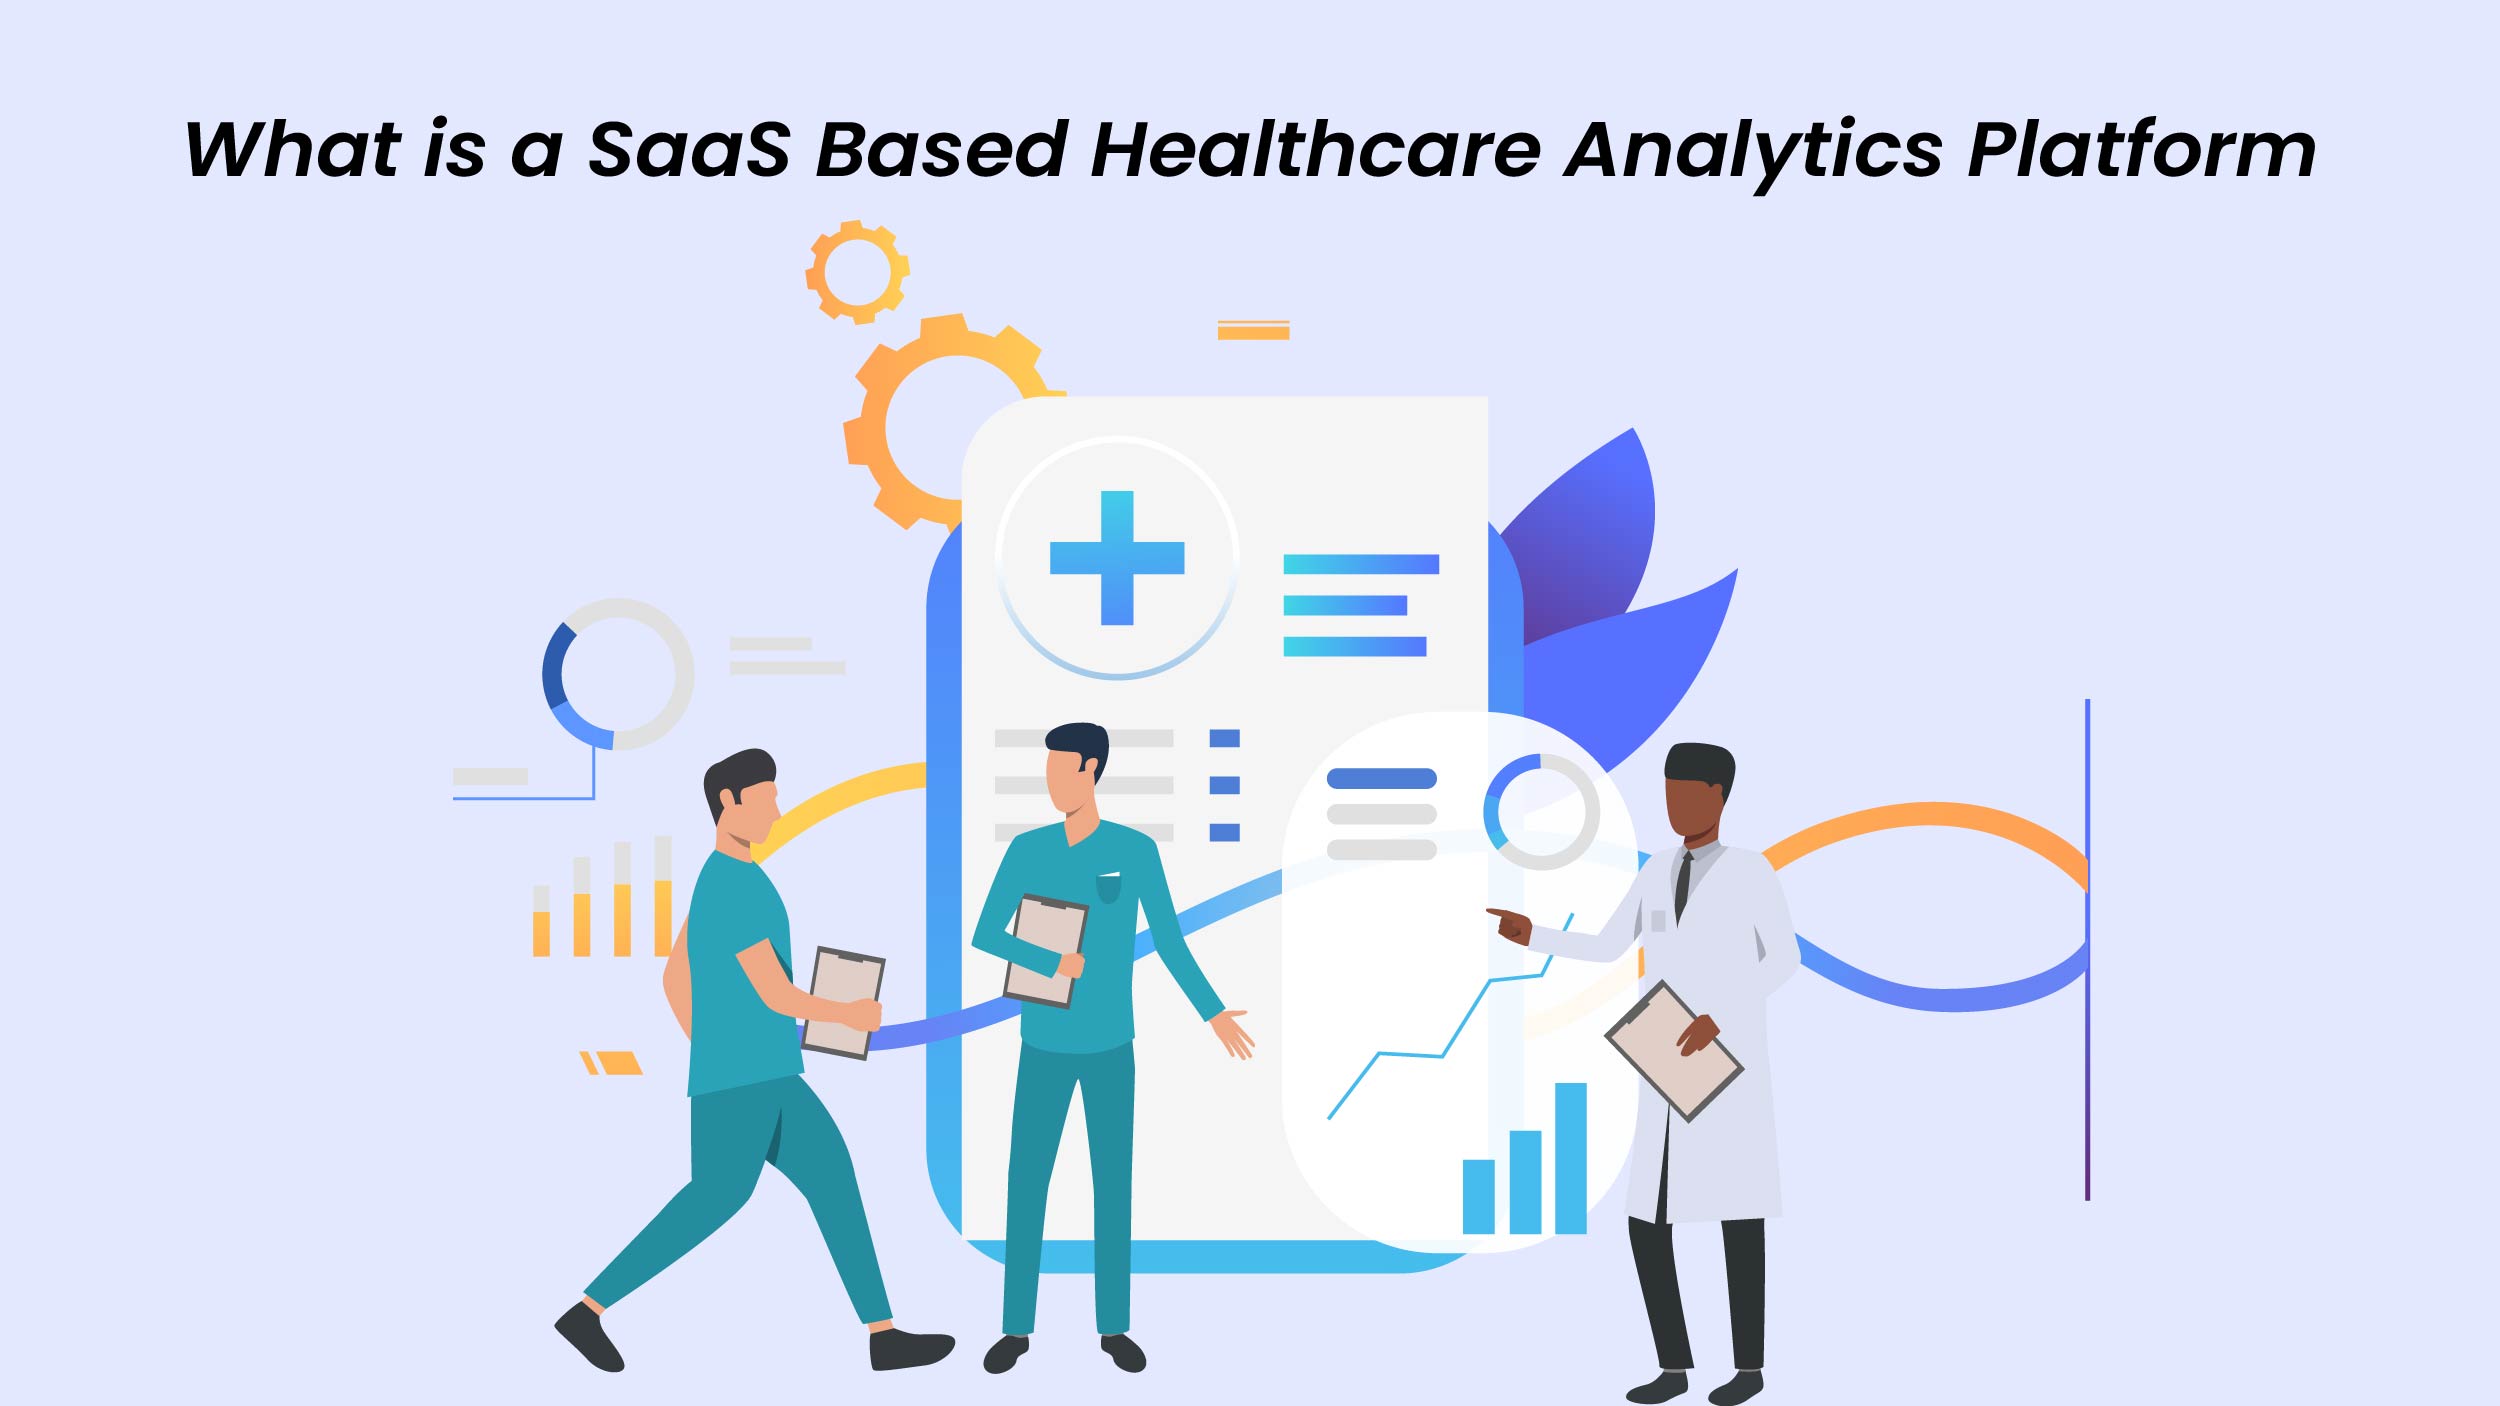 Healthcare Analytics Platform